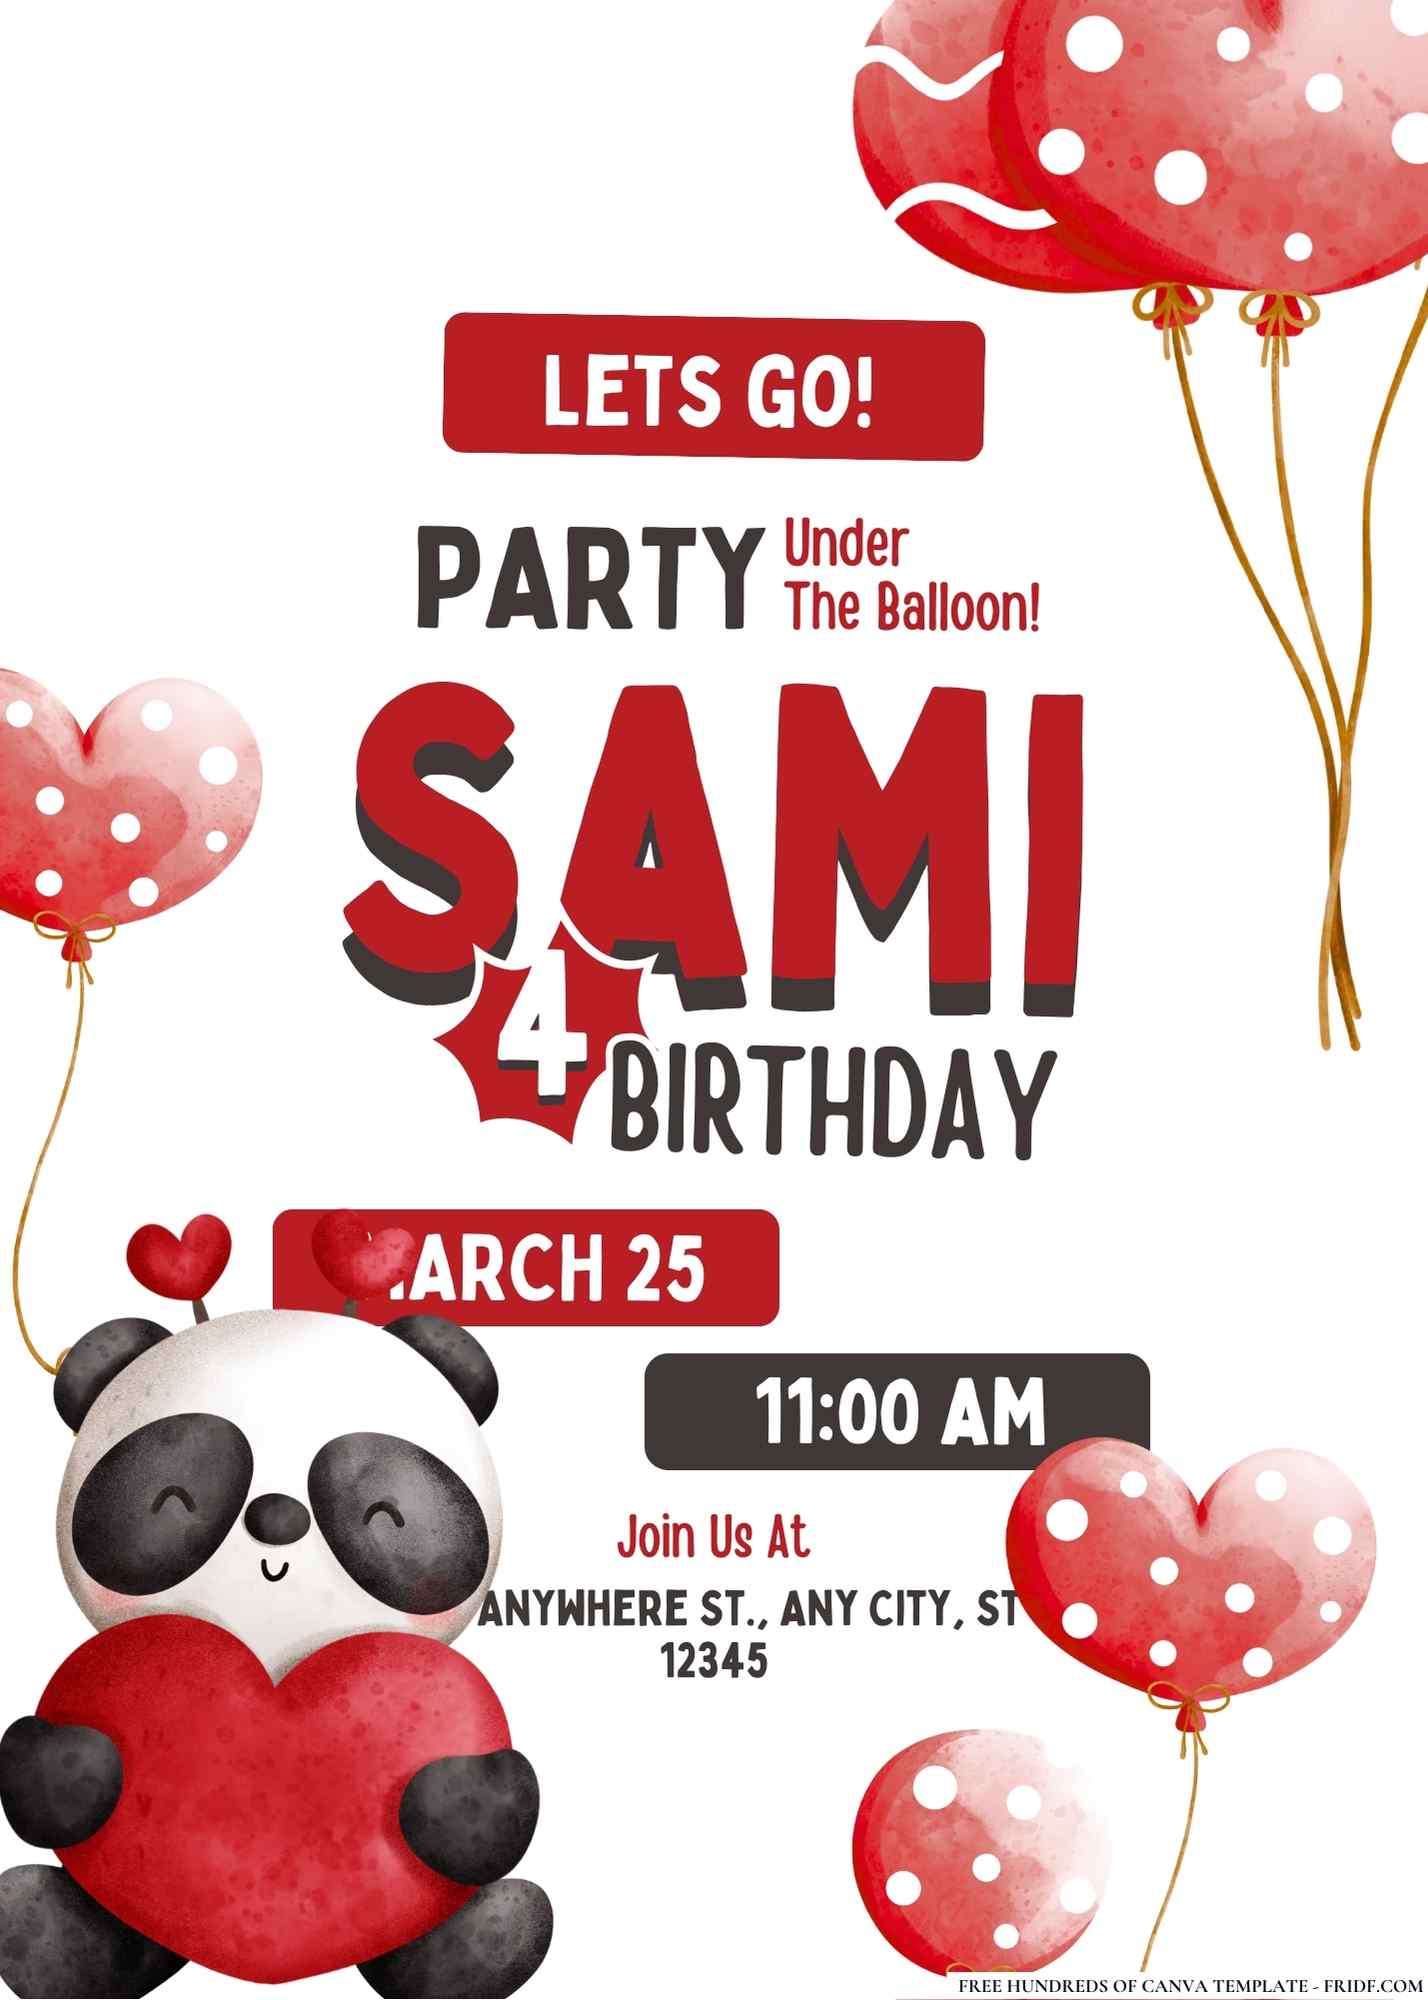 FREE Panda Balloon Birthday Invitations